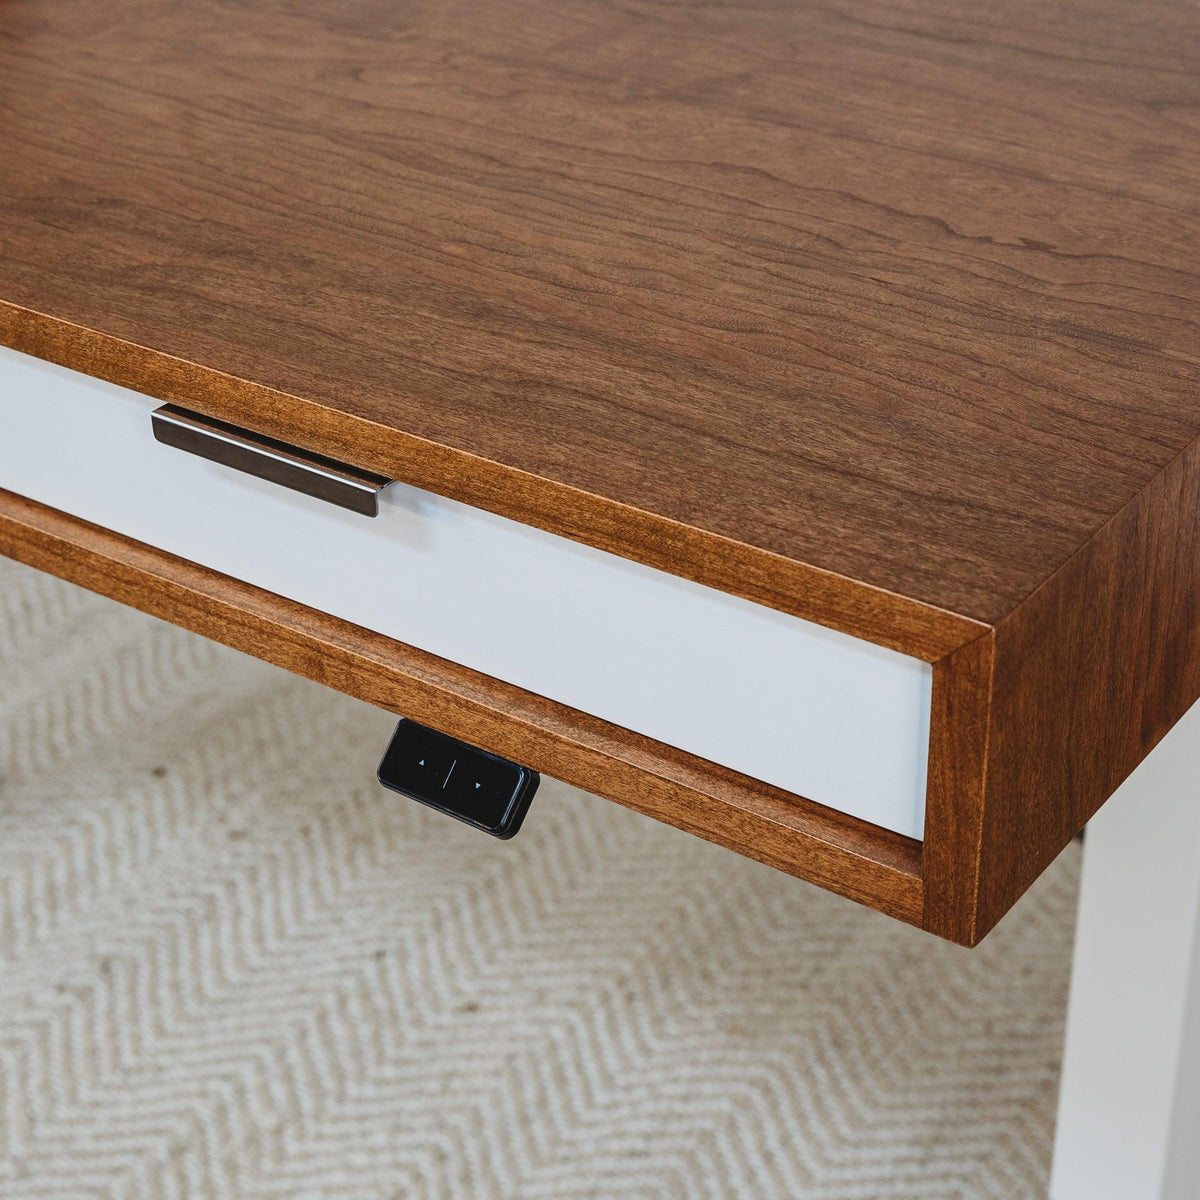 SLIM DESK // Modern Wood Desk With Drawers // Fixed or Adjustable Height  Desk